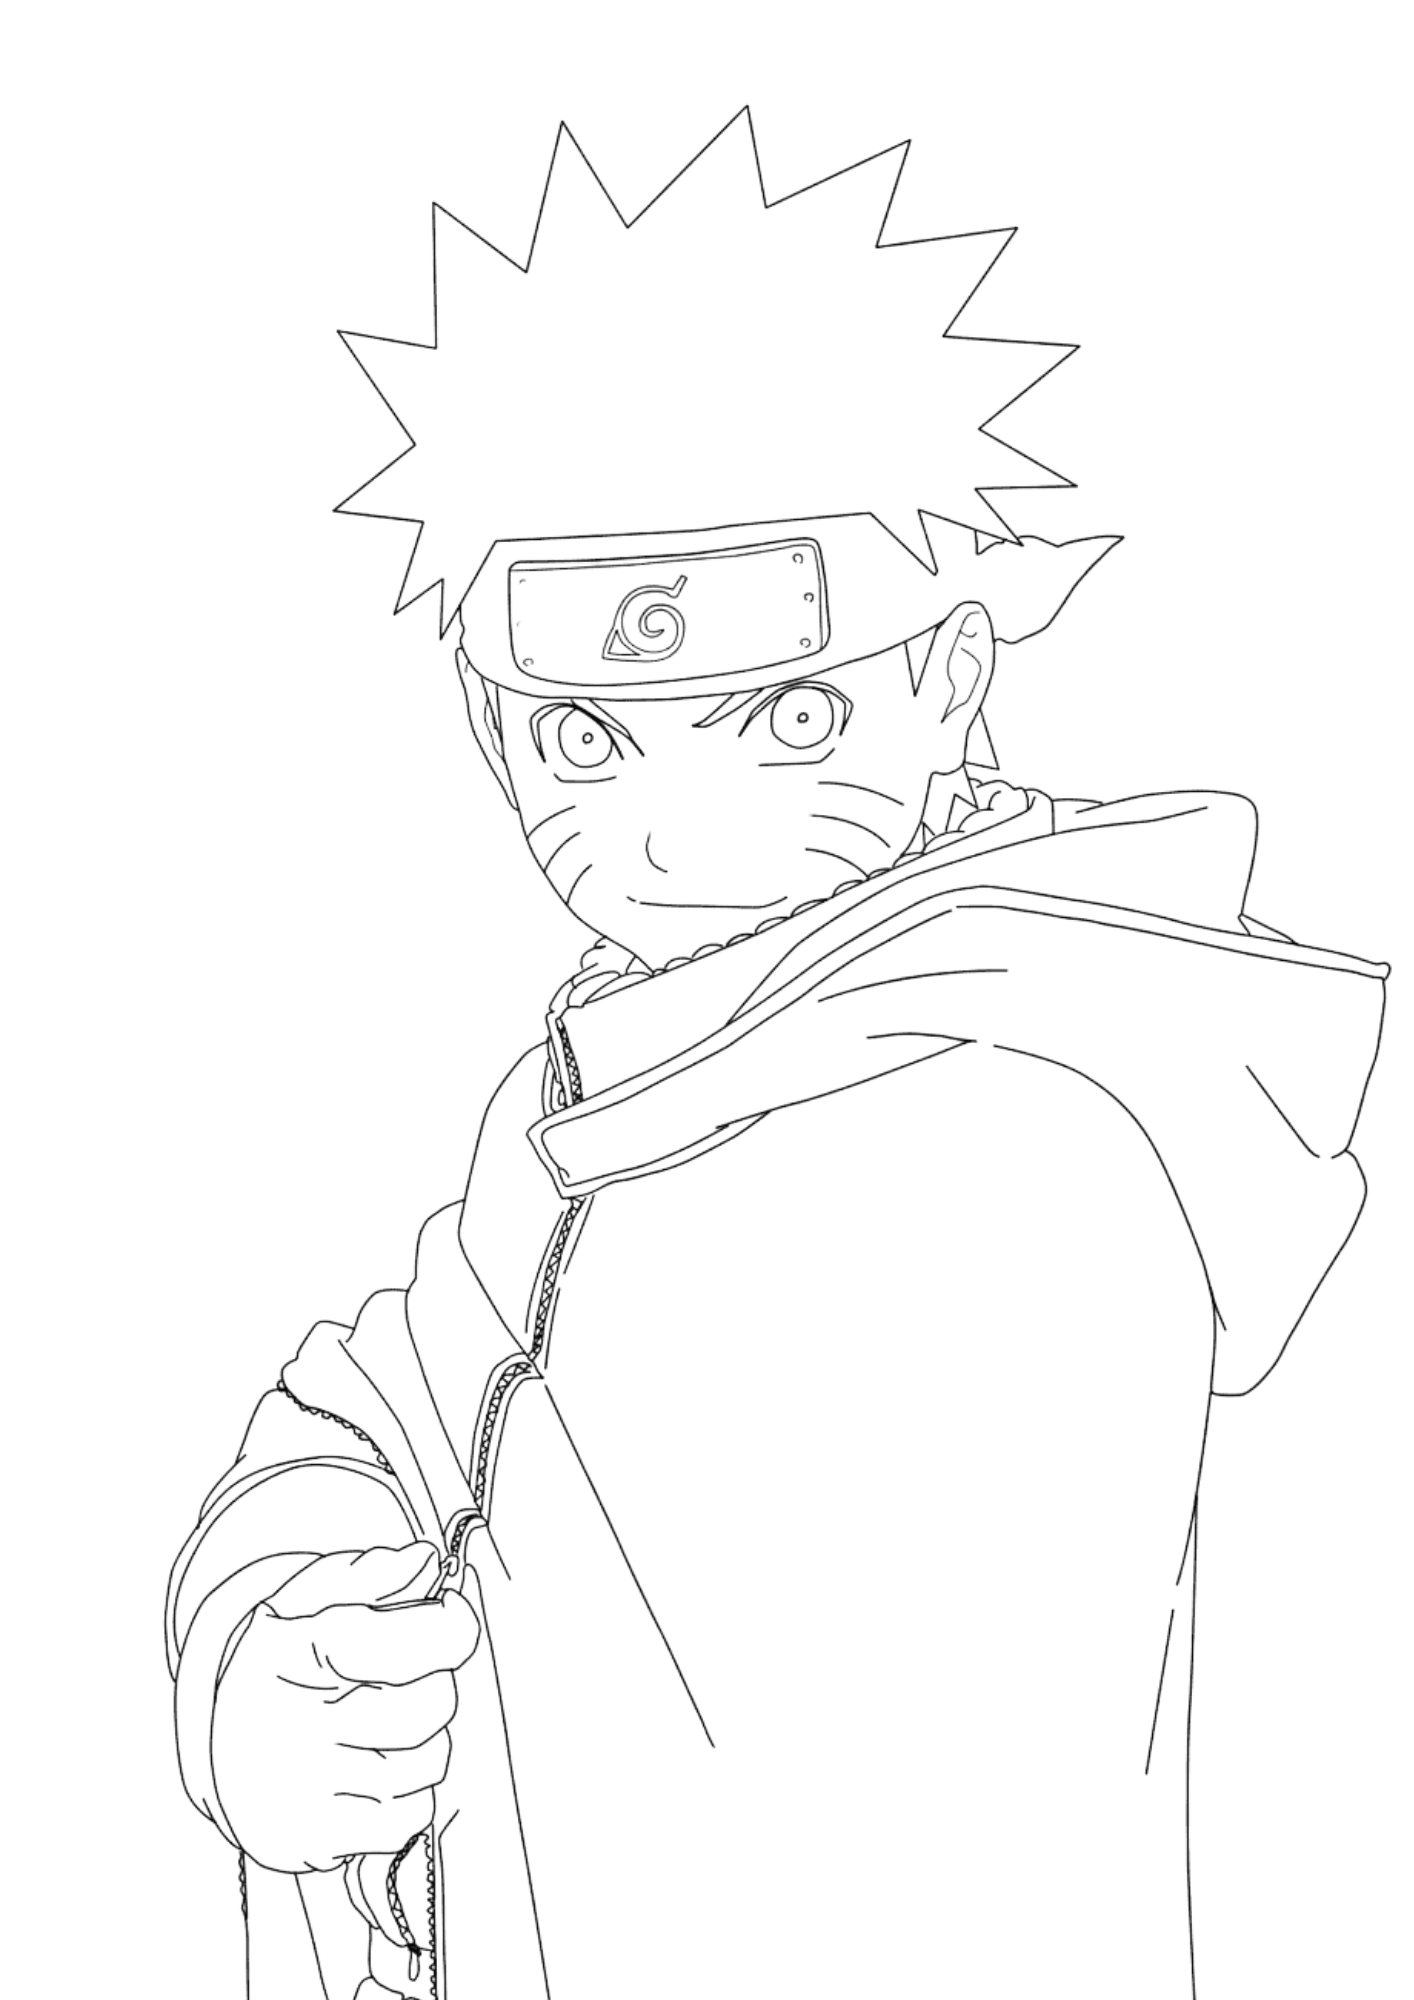 Desenhos para colorir: Naruto - Ensinar Hoje